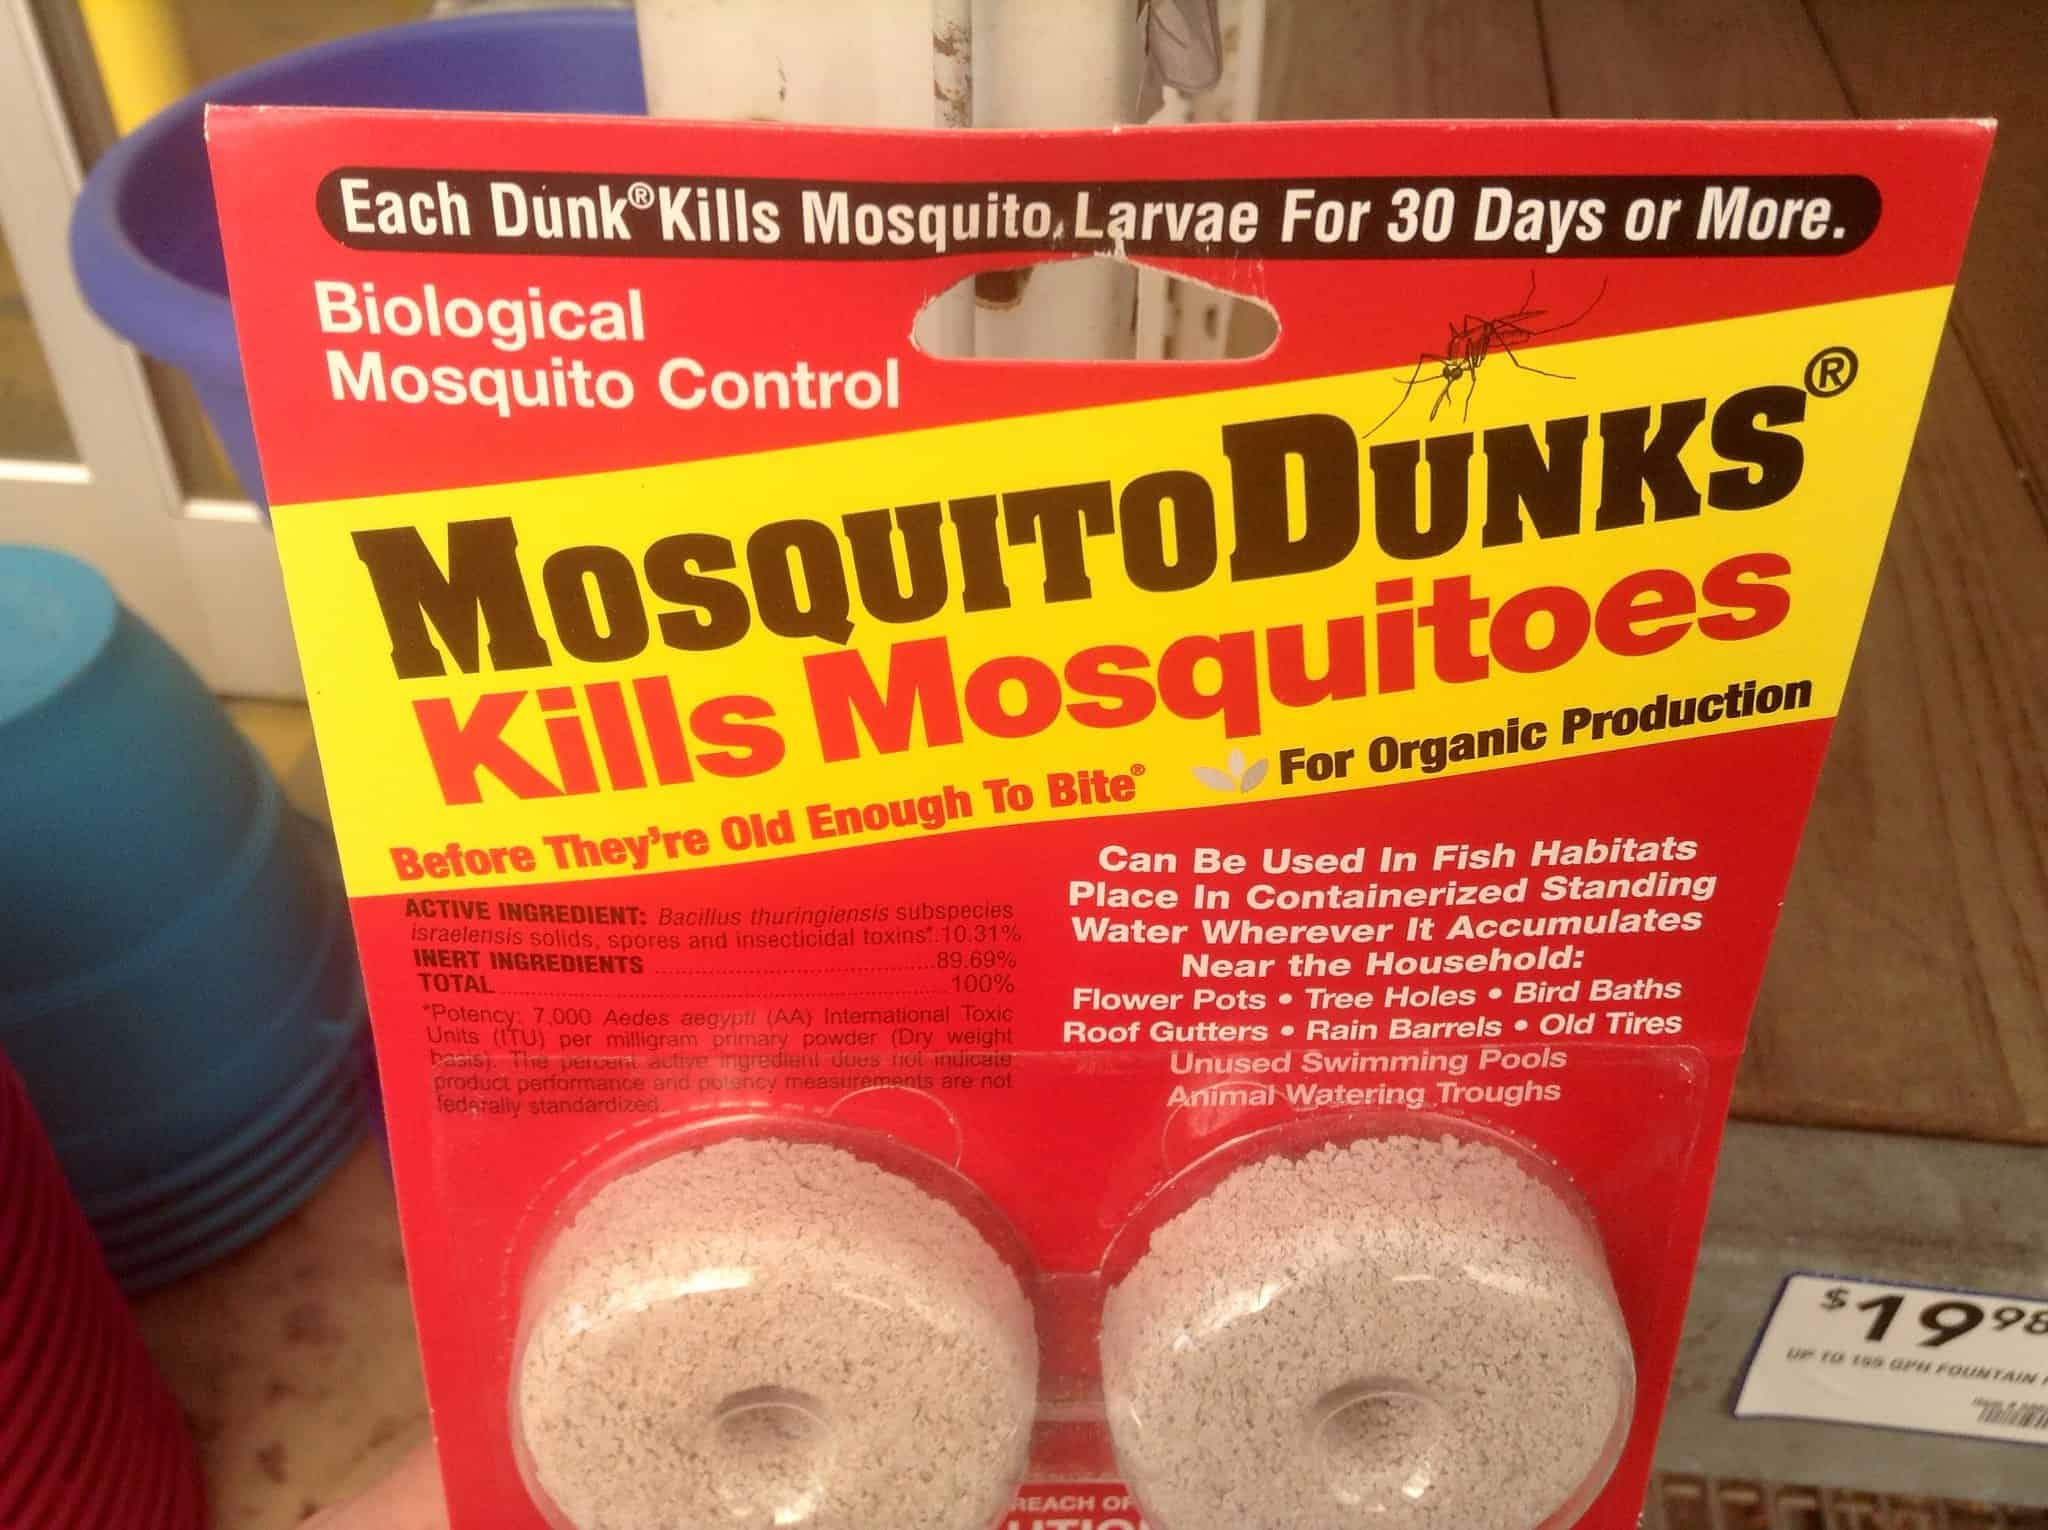 mosquito dunks